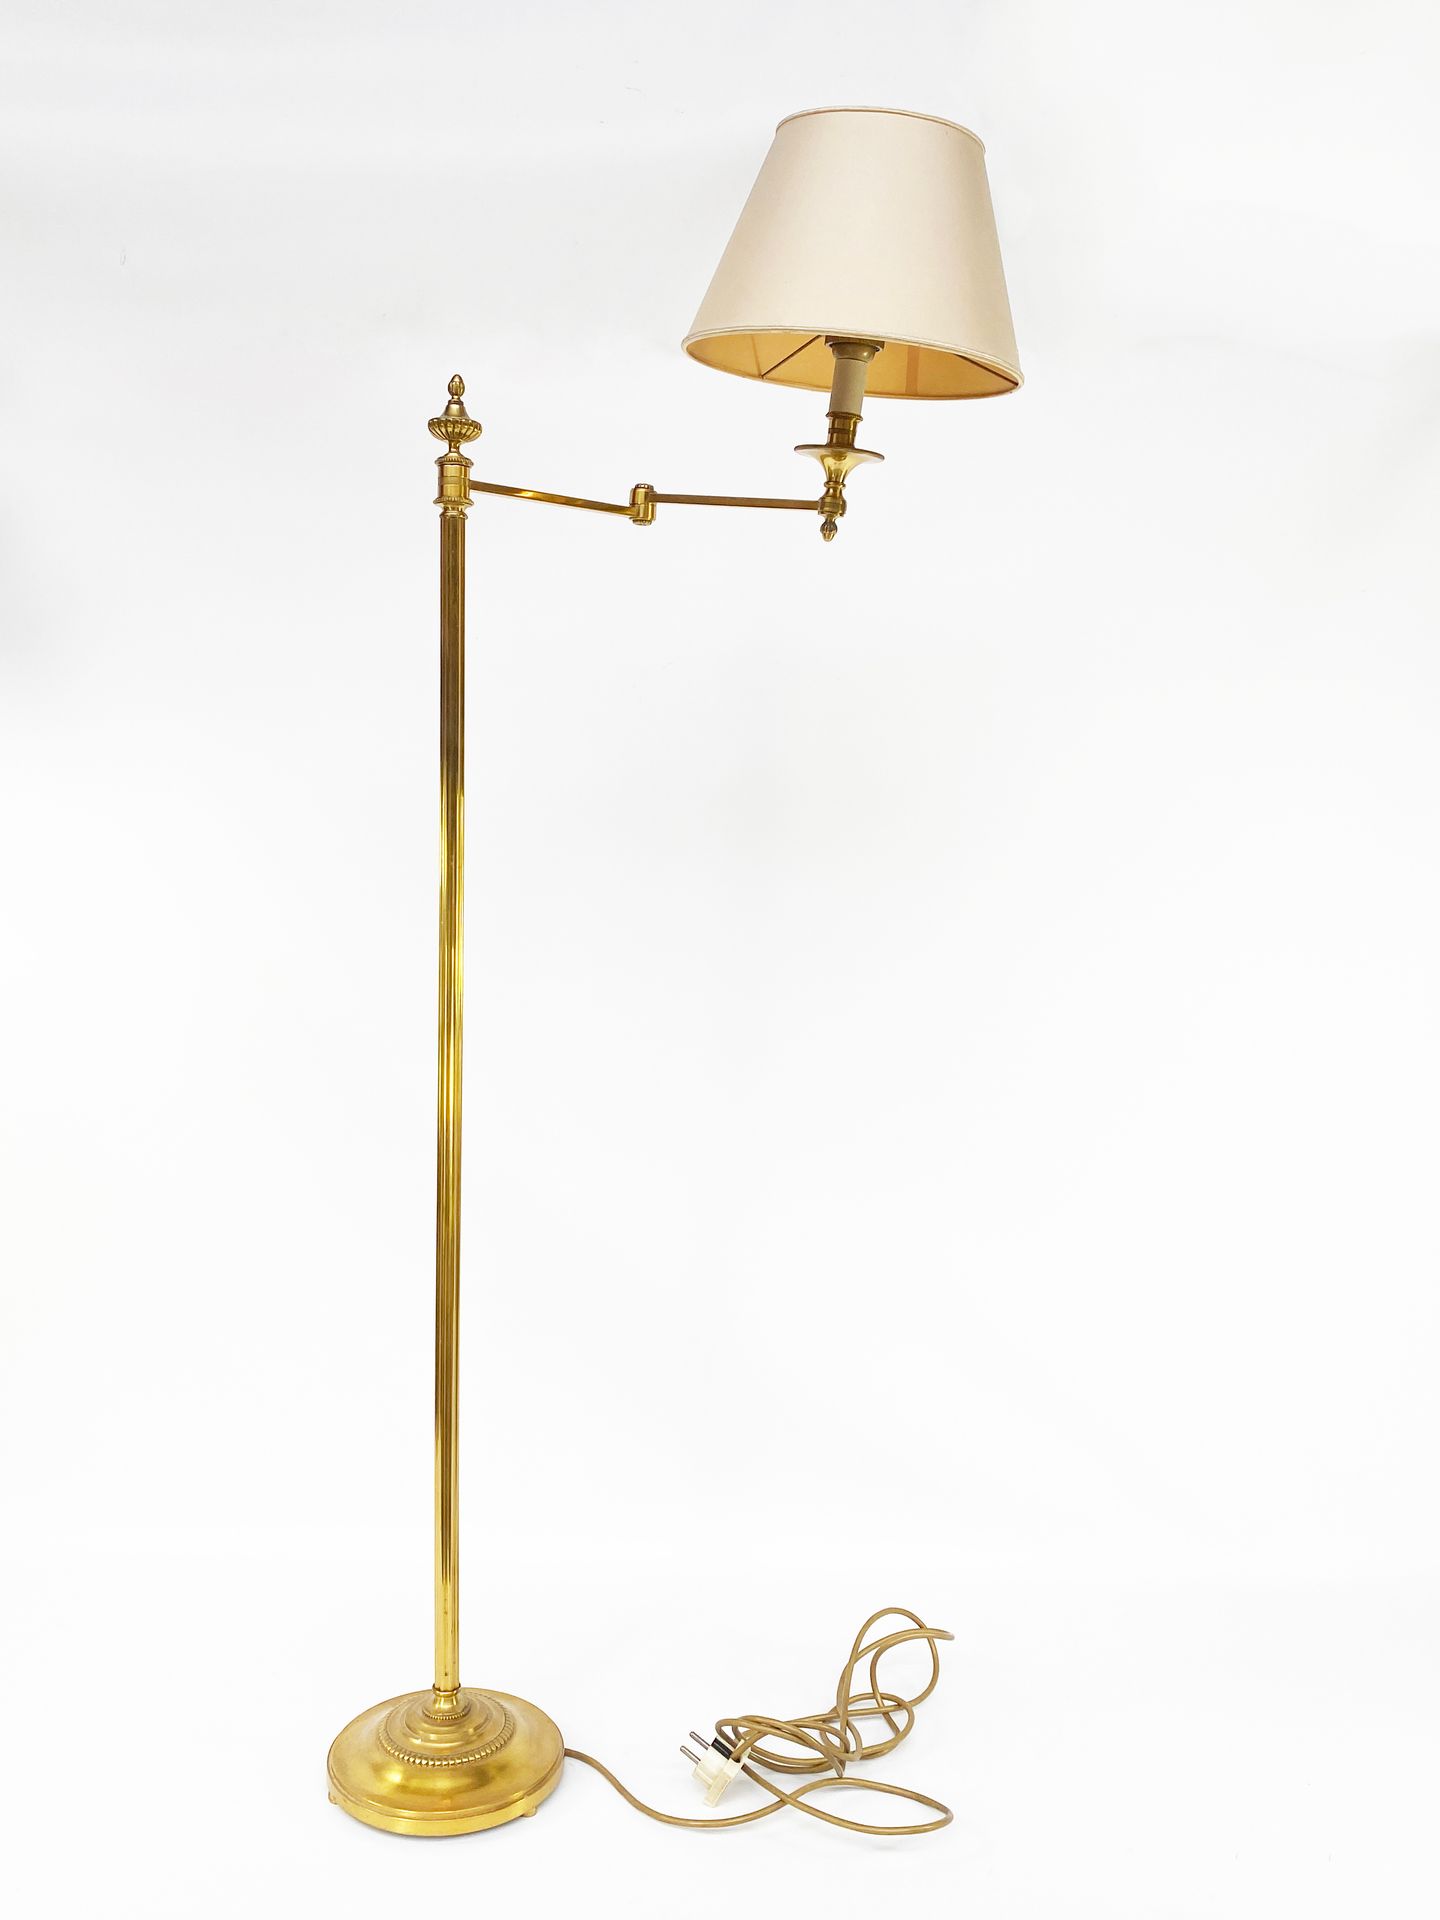 Null 鎏金金属灯架，带展开式灯臂。

有凹槽的轴，底部装饰有珍珠楣。

H.117厘米